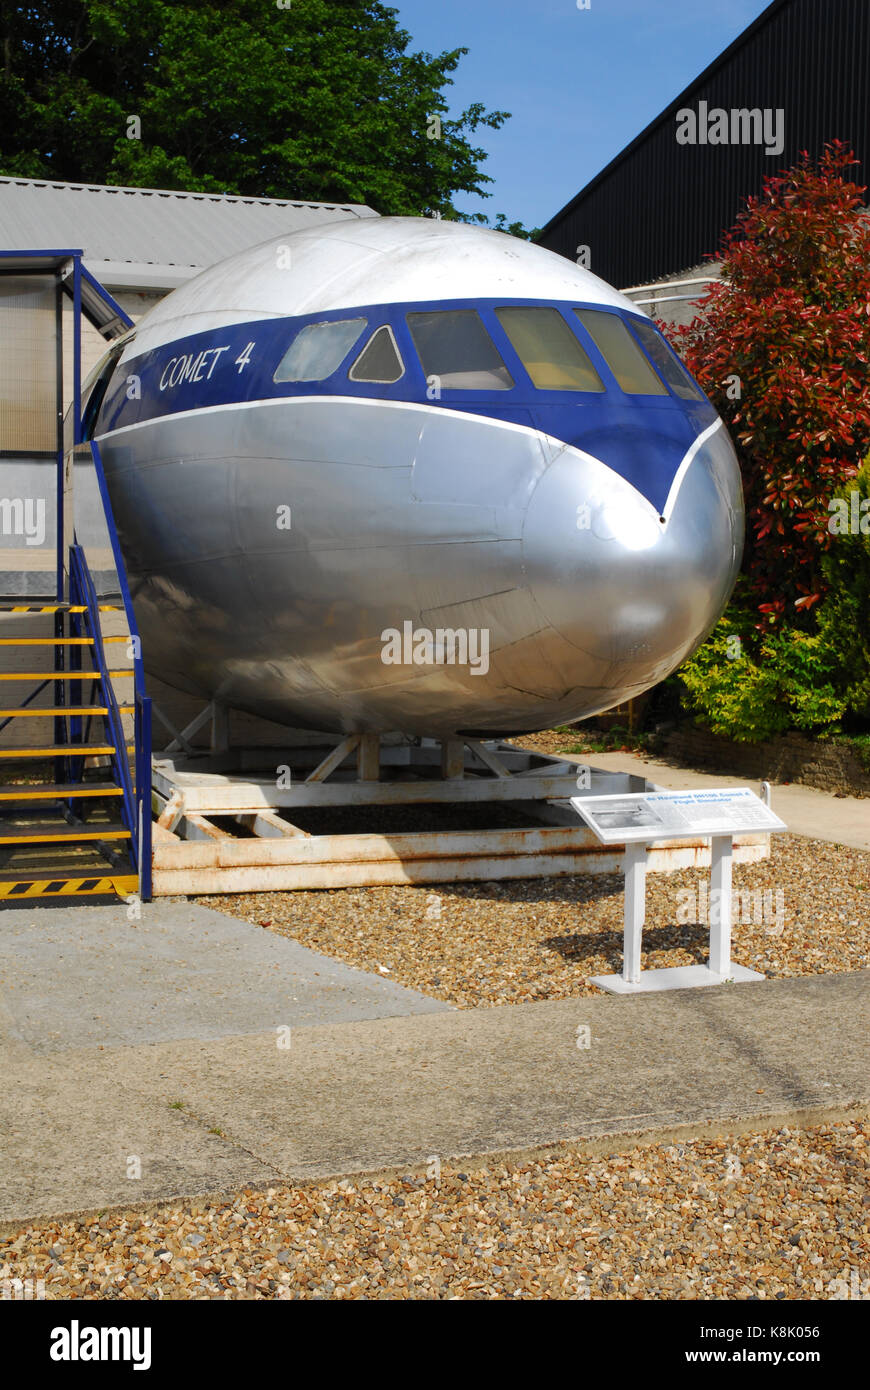 United Kingdom, Shenley, London Colney, The de Havilland Aircraft Museum, Comet 4 Stock Photo